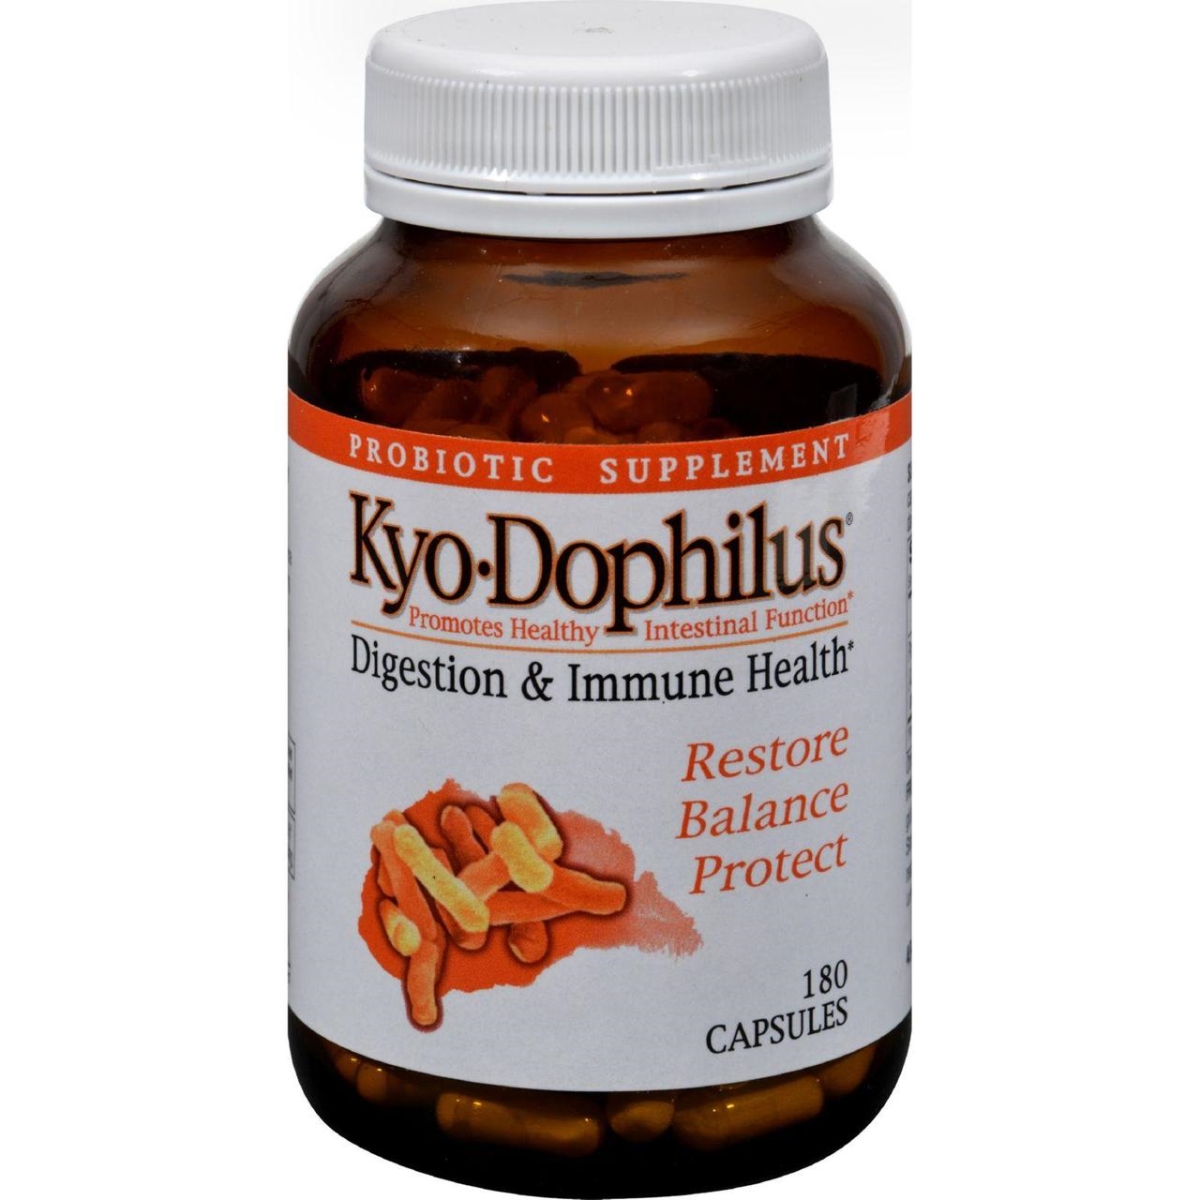 Hg0541185 Kyo-dophilus Digestion & Immune Health - 180 Capsules